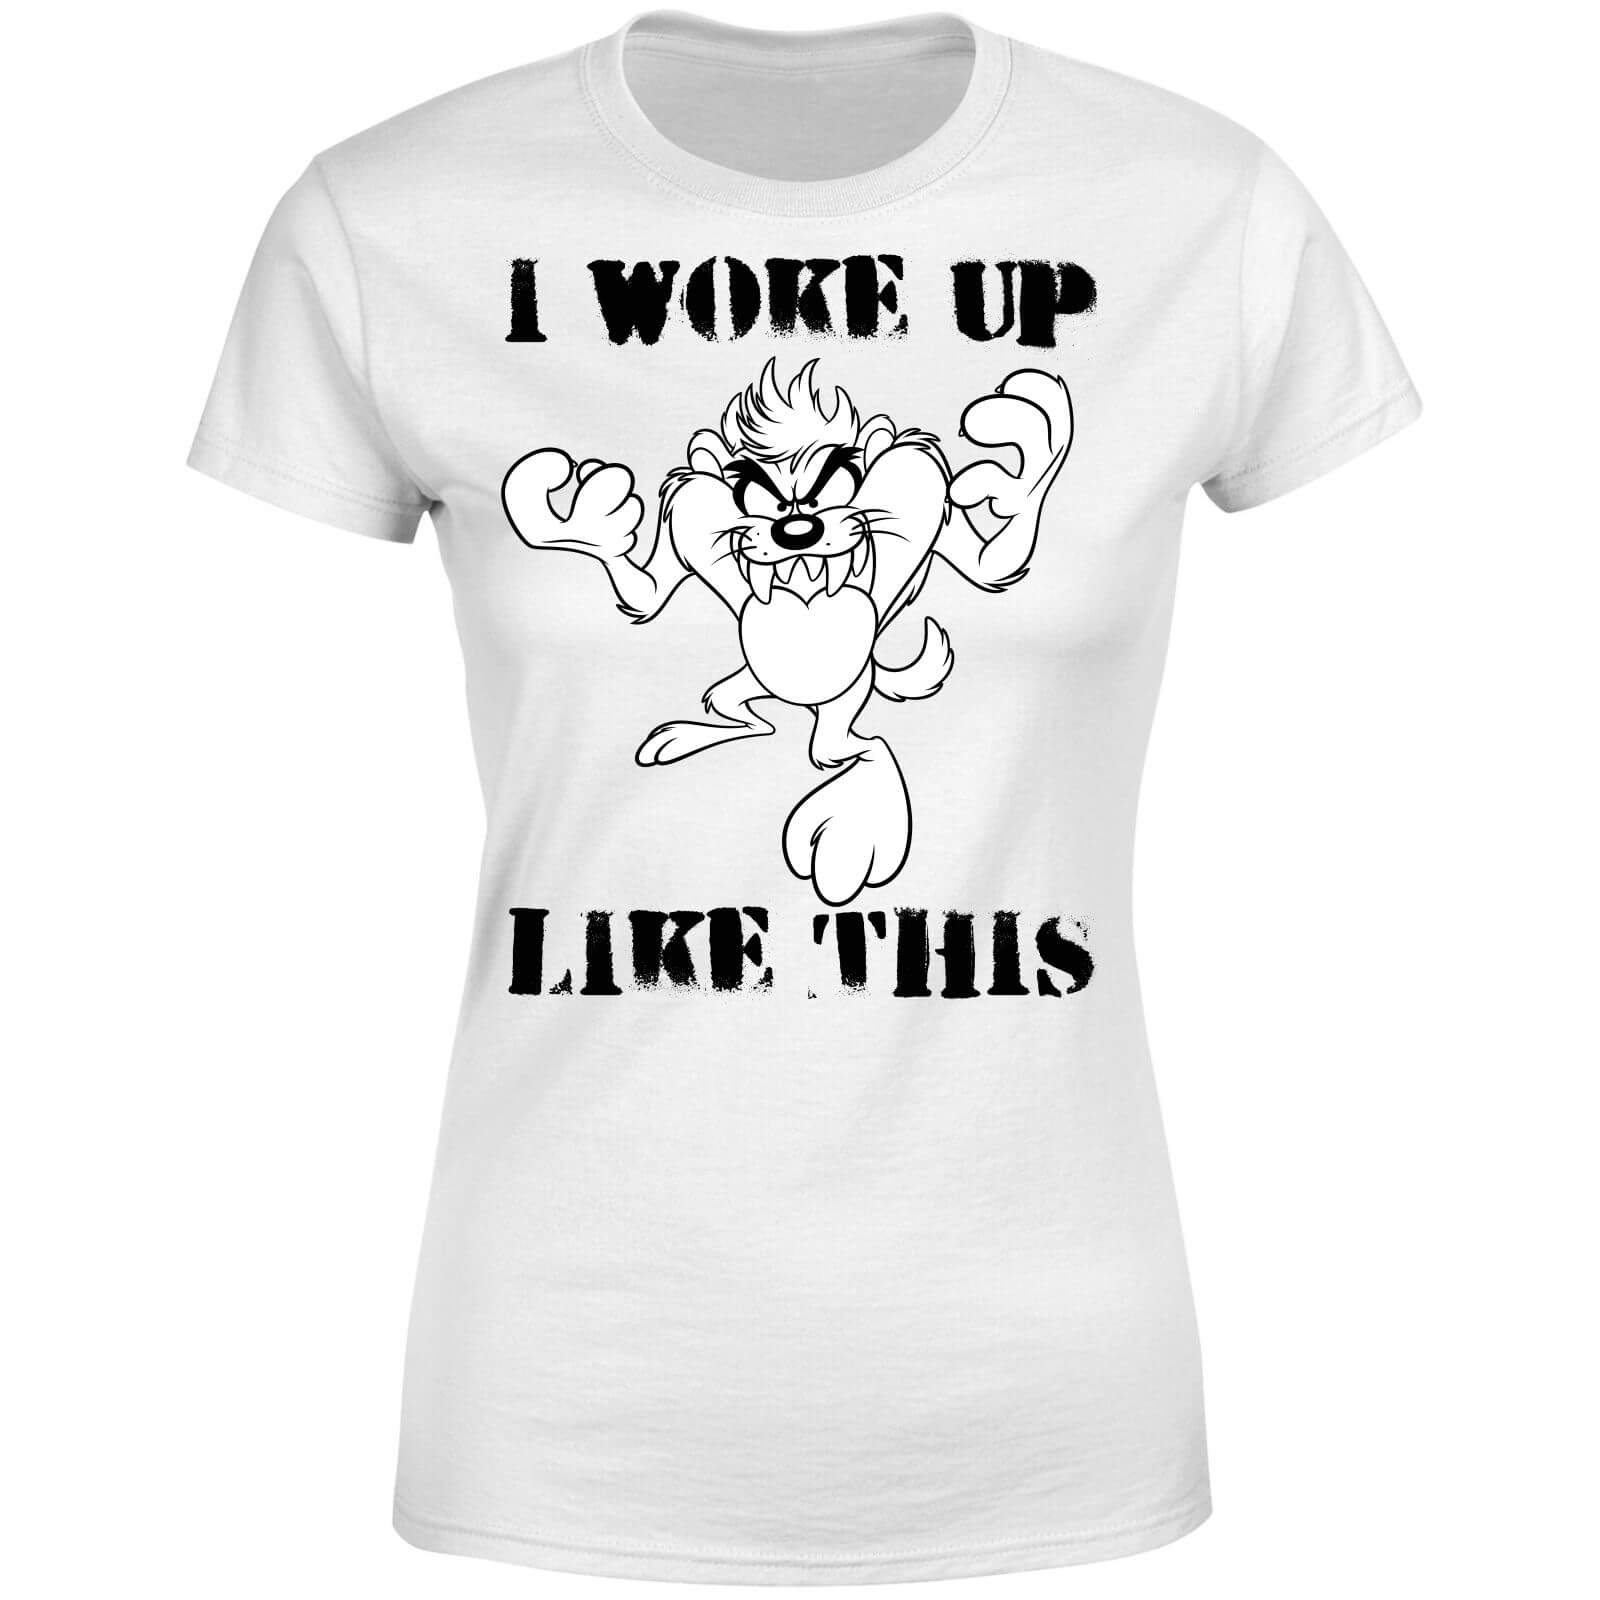 Looney Tunes I Woke Up Like This Women's T-Shirt - White - 3XL - White